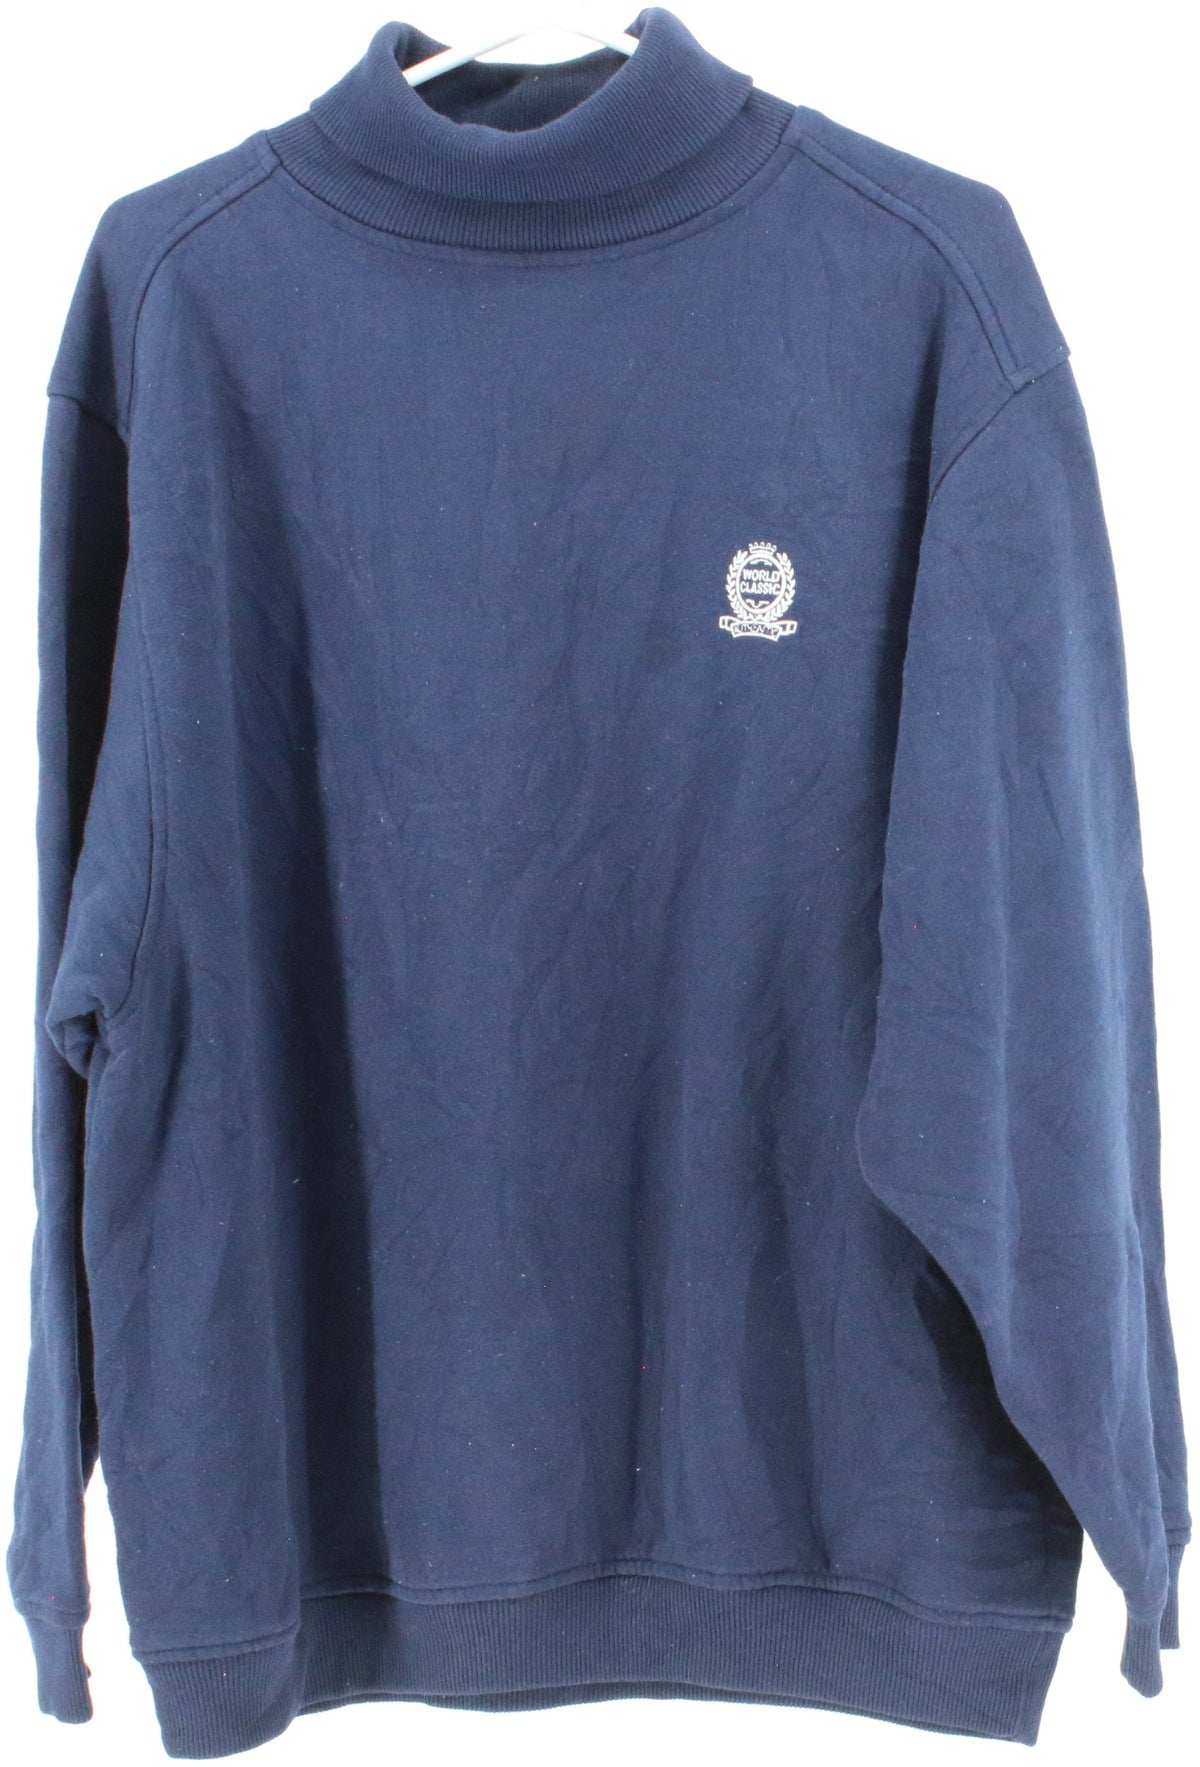 Gap World Classic Authentic Navy Blue Turtleneck Sweatshirt